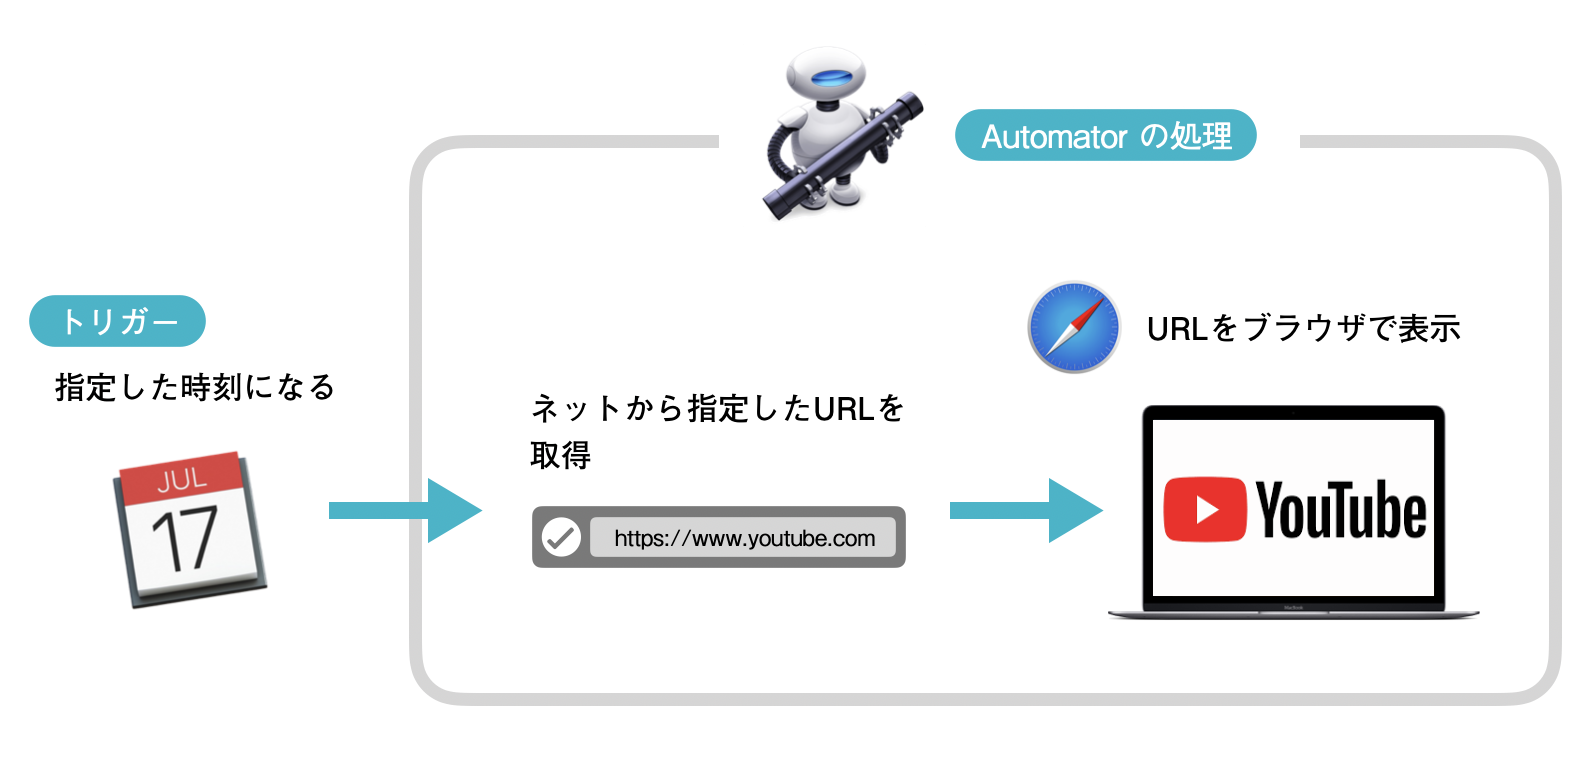 Mac純正アプリ「Automator」で最強のYoutubeアラームを作る！